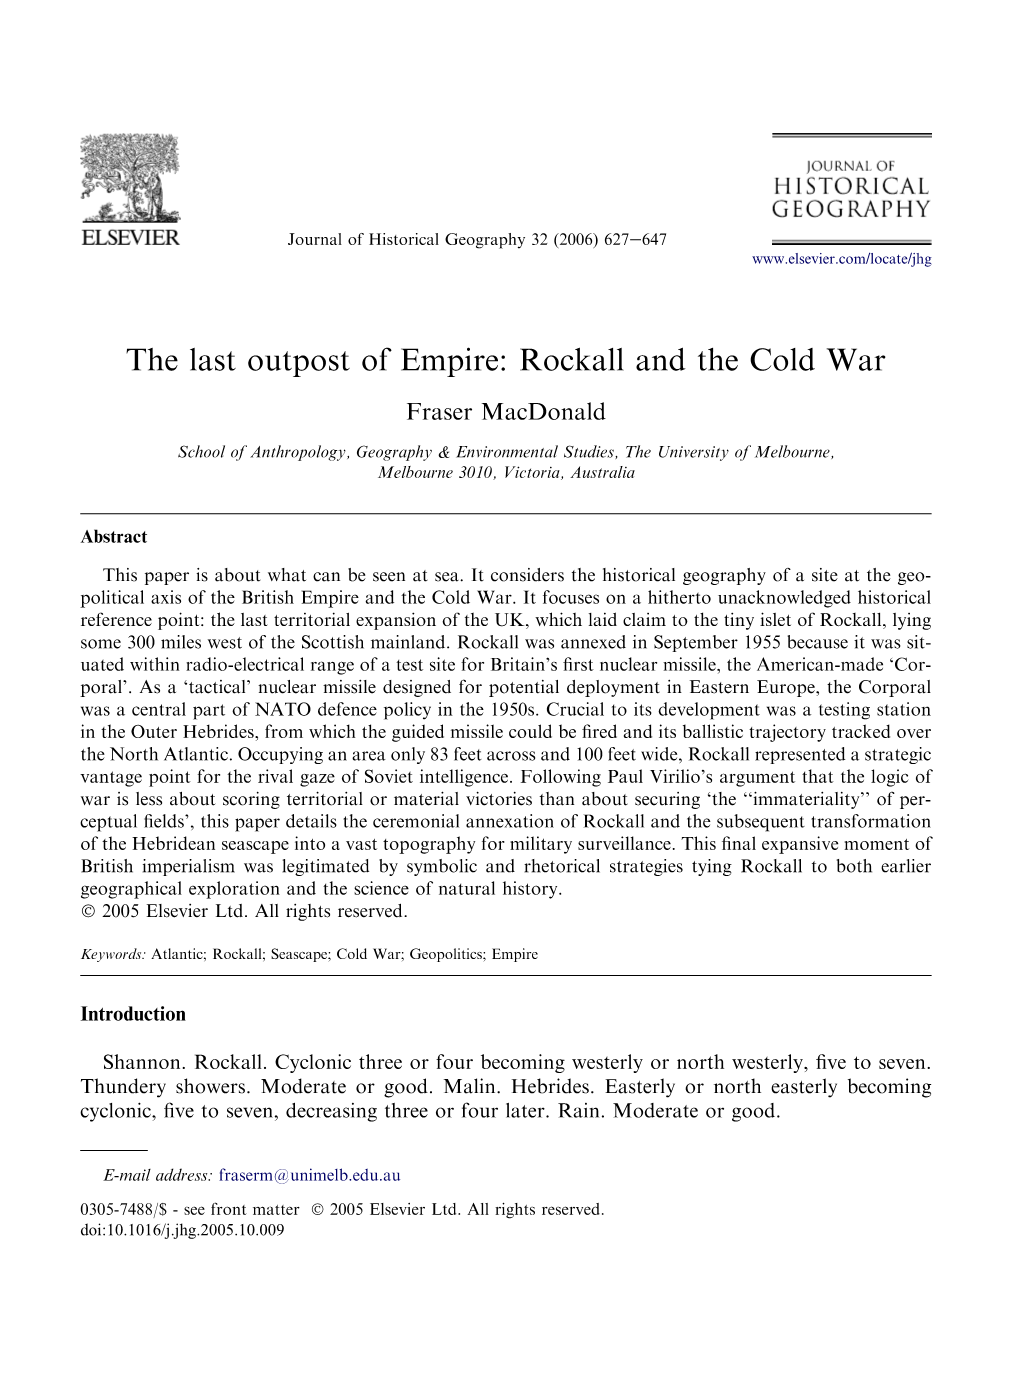 Rockall and the Cold War Fraser Macdonald